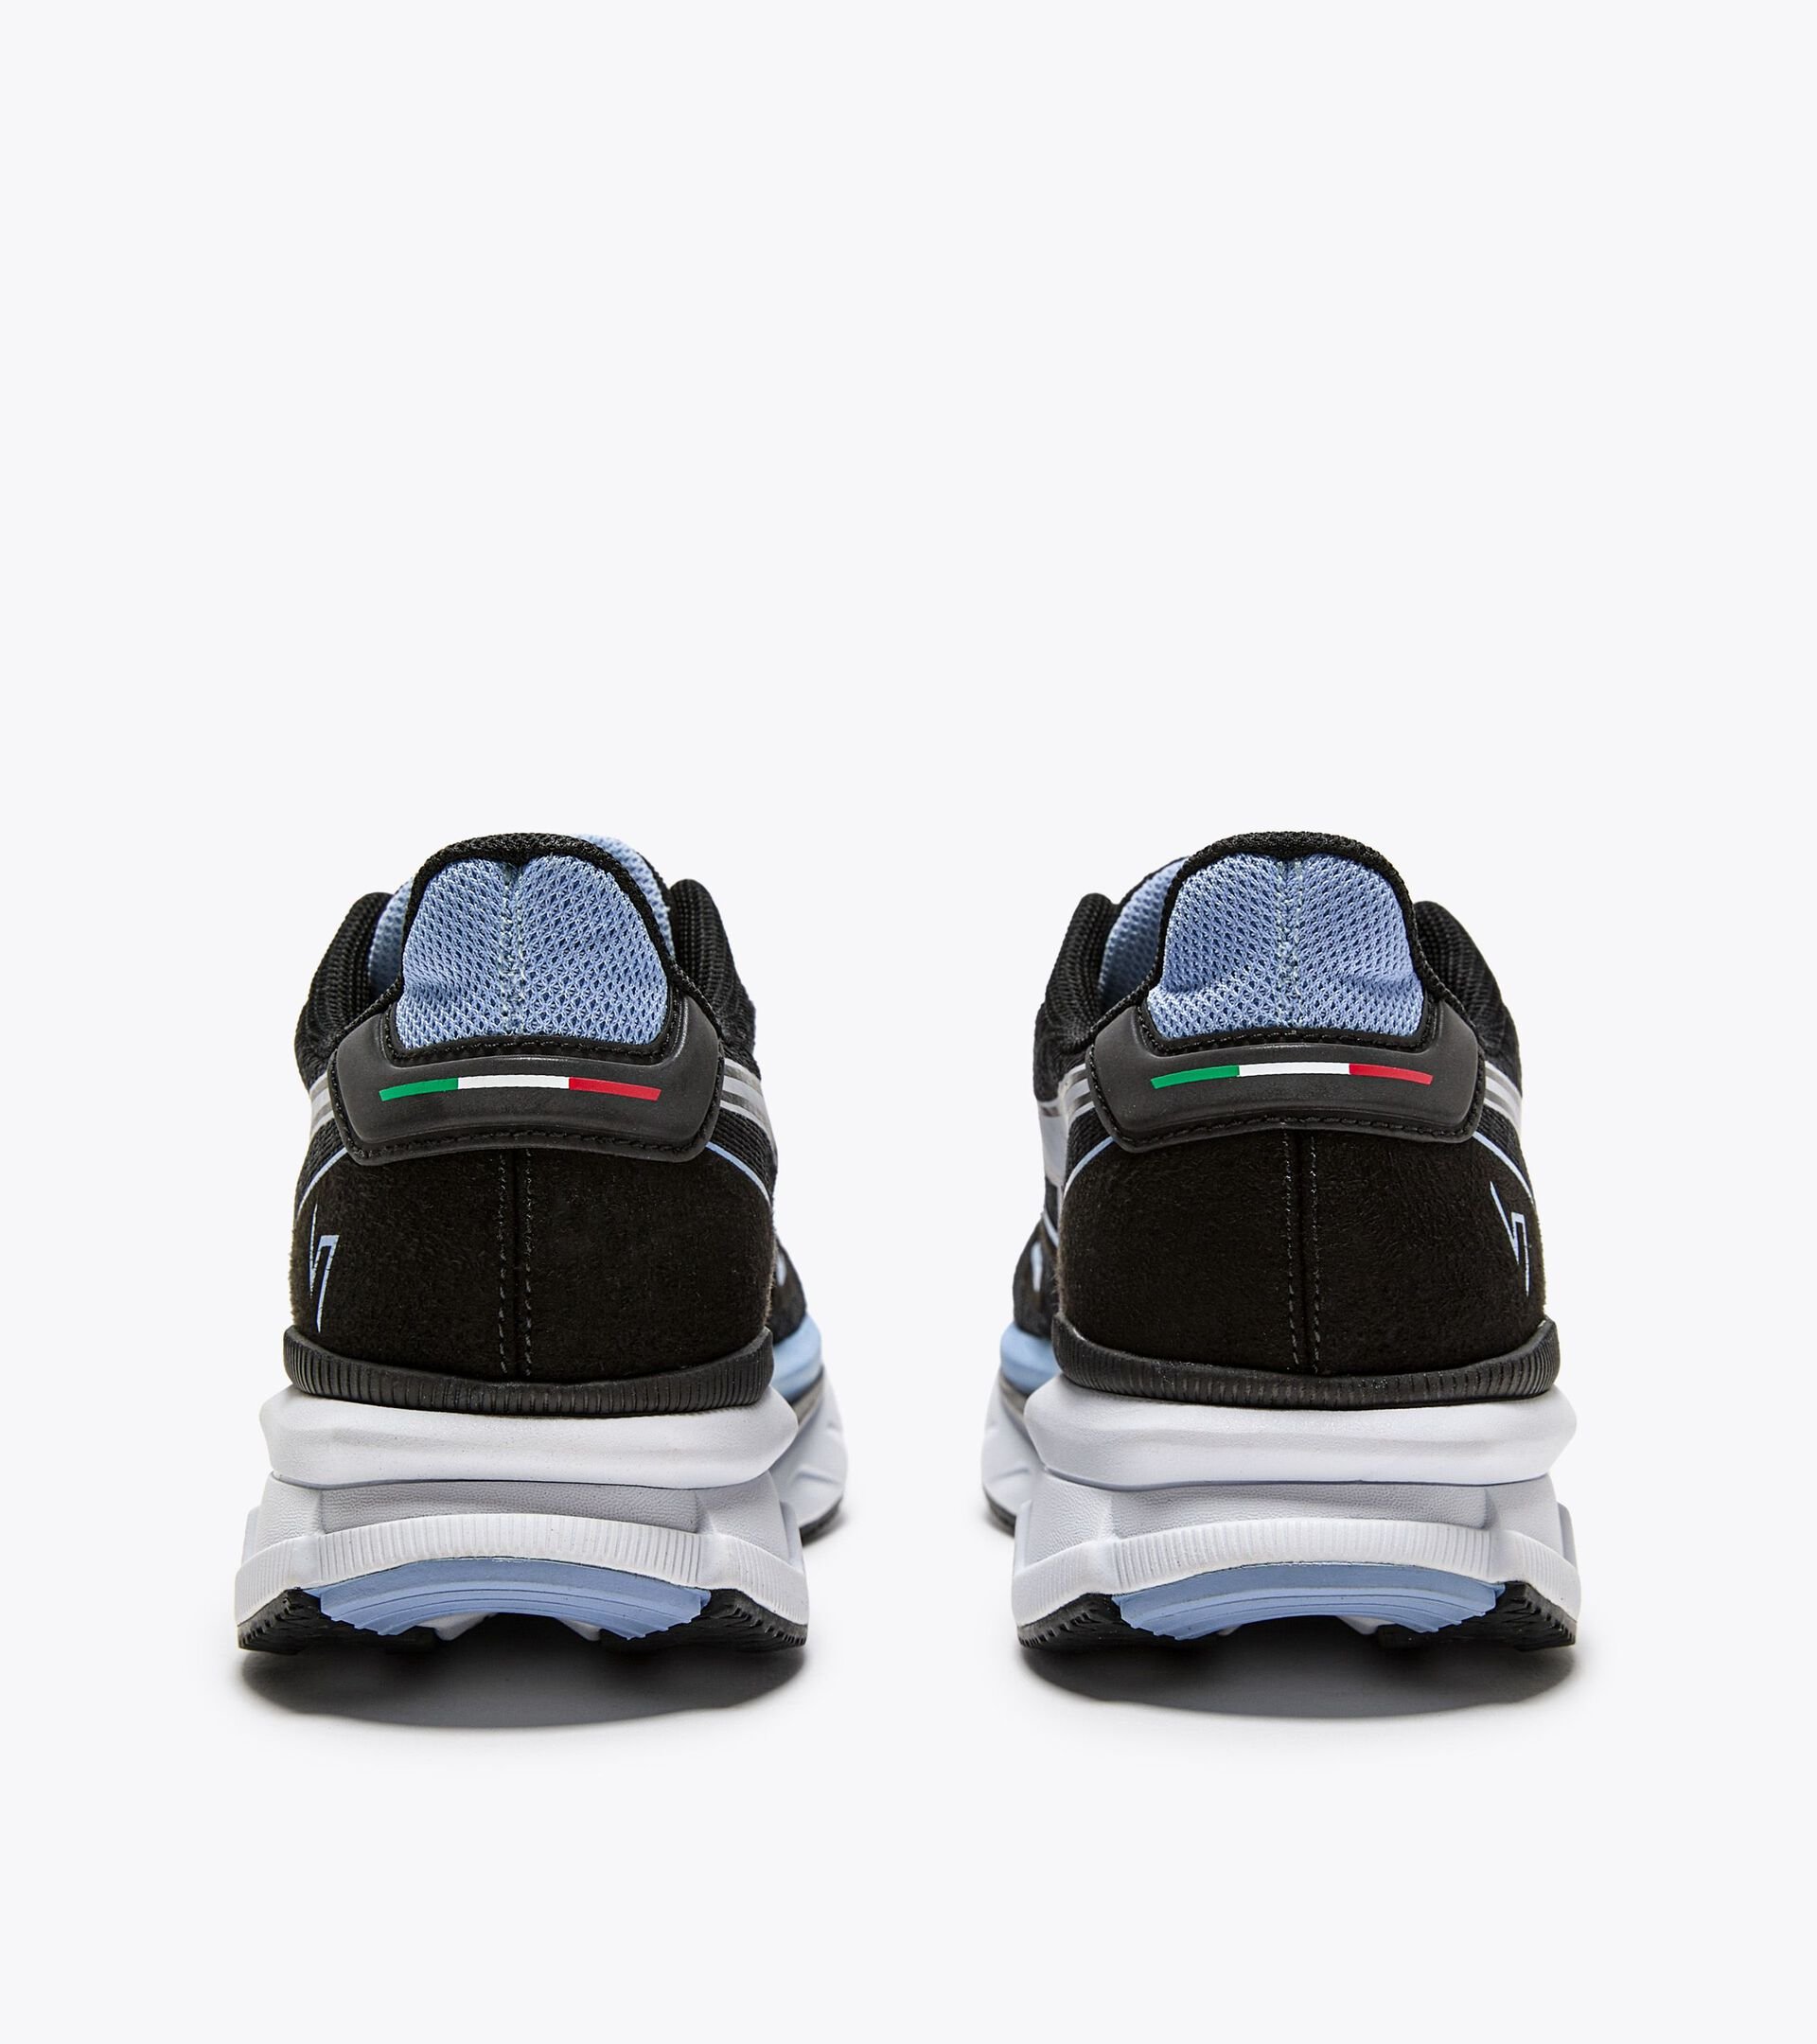 Chaussures de running Made in Italy - Femme ATOMO V7000 W  - Diadora